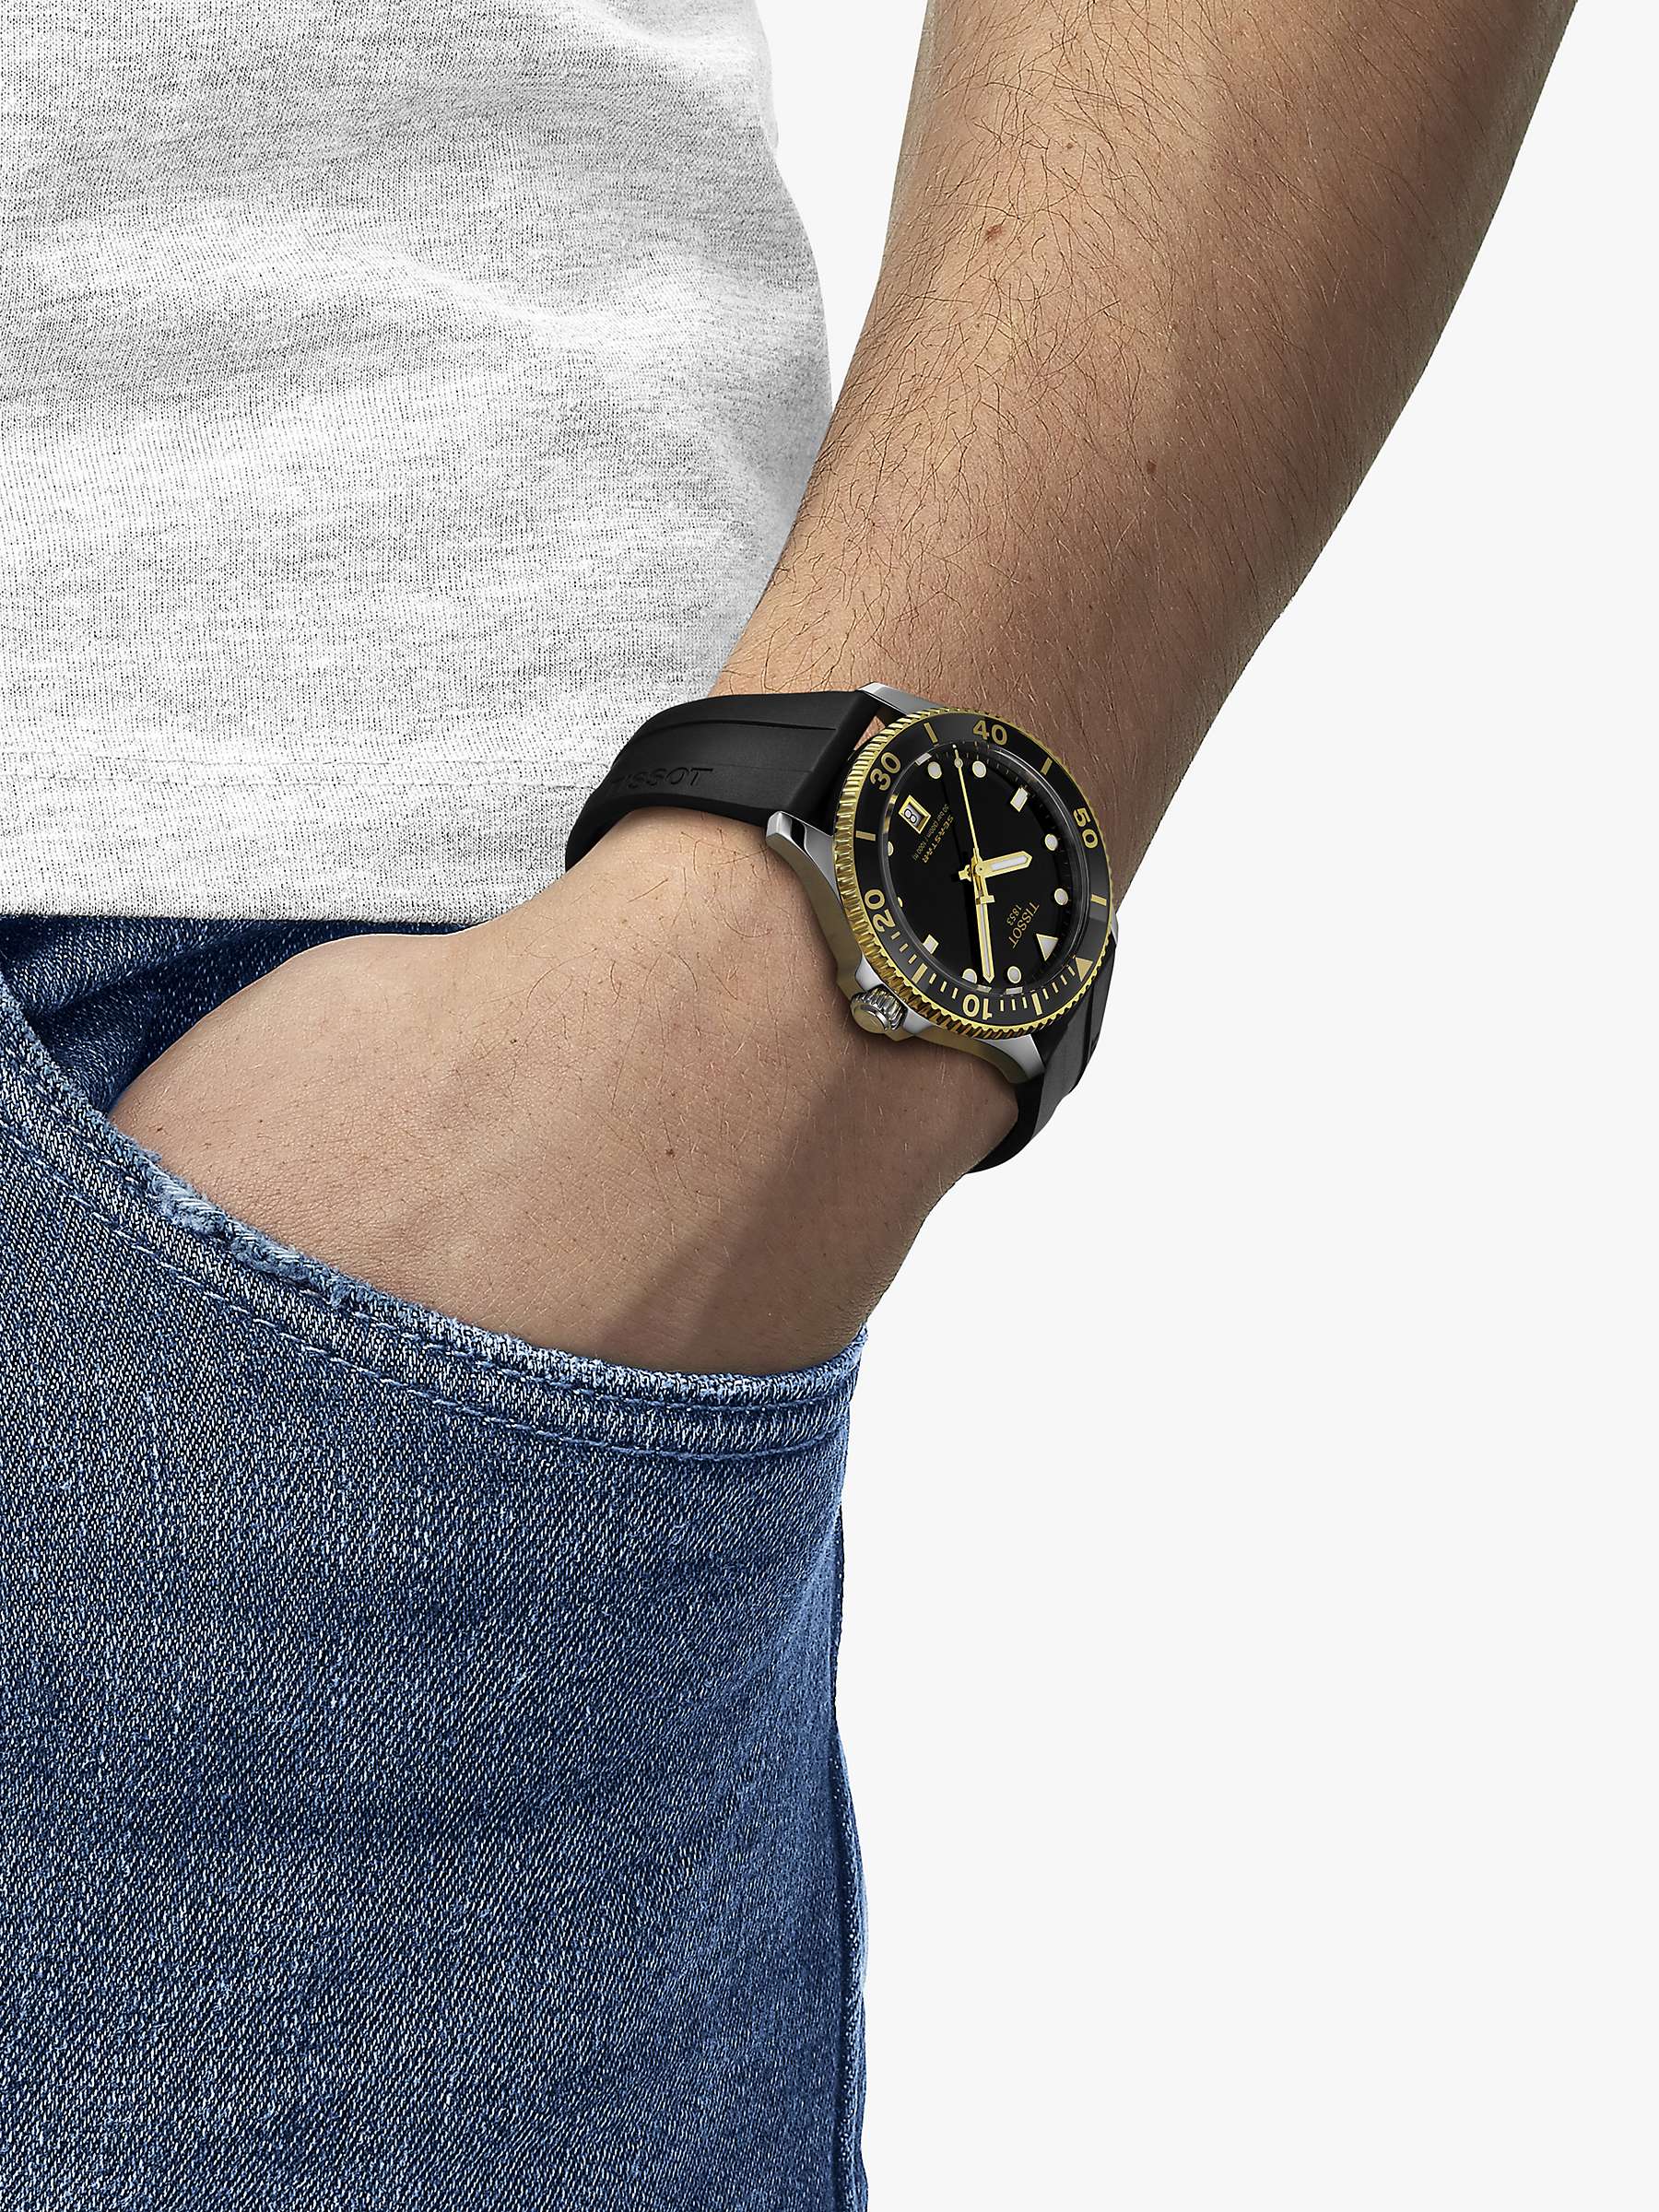 Buy Tissot T1204102705100 Men's Seastar 1000 Rubber Strap Watch, Black Online at johnlewis.com